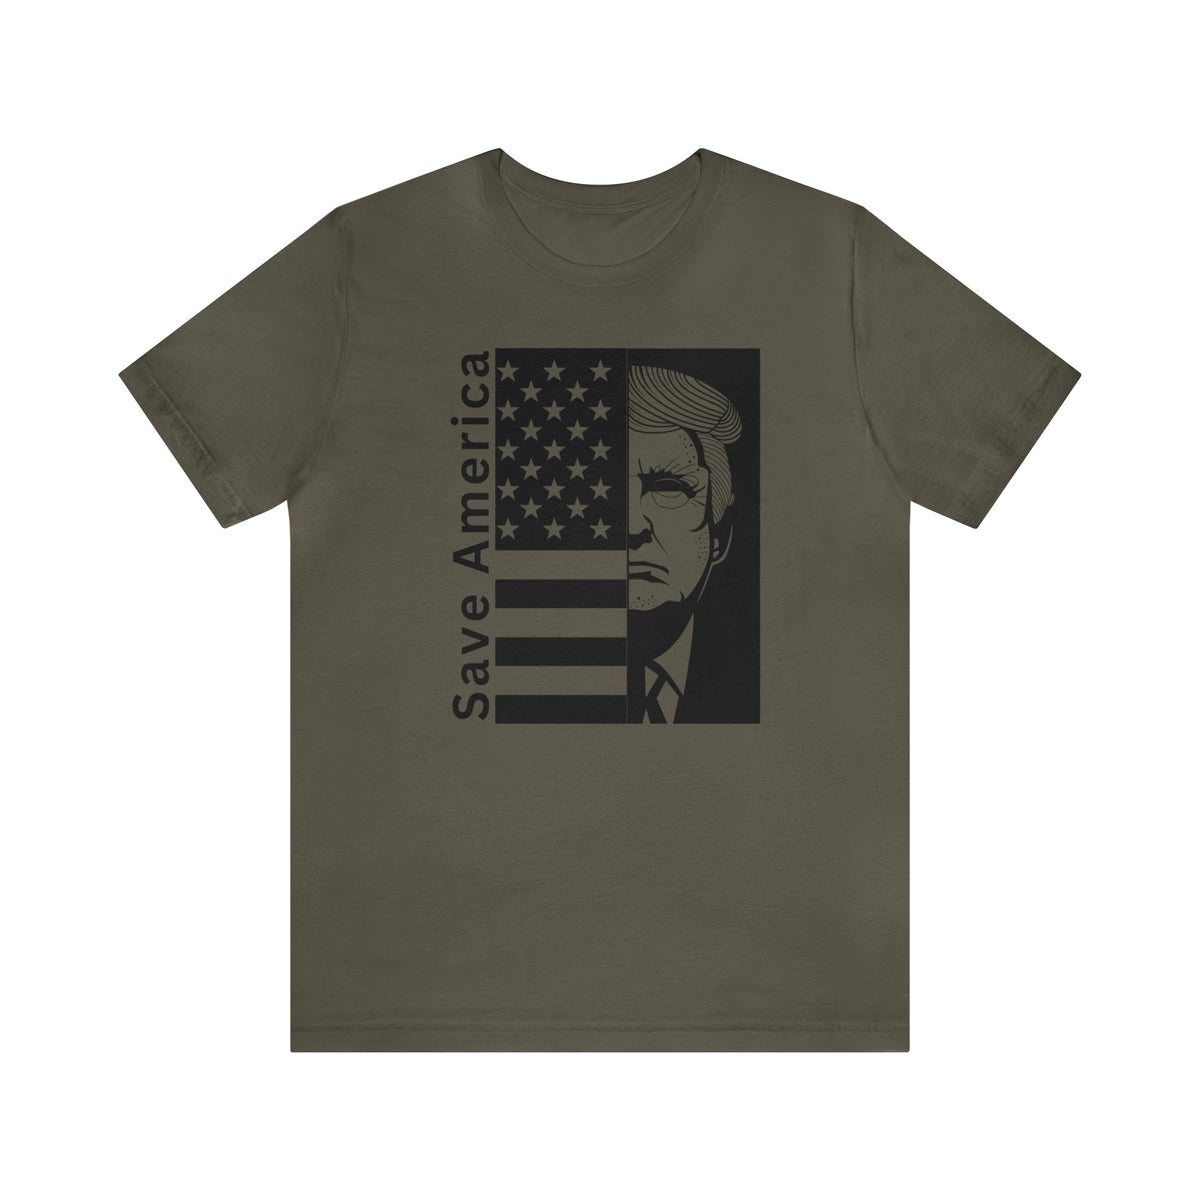 Trump Save America T-Shirt